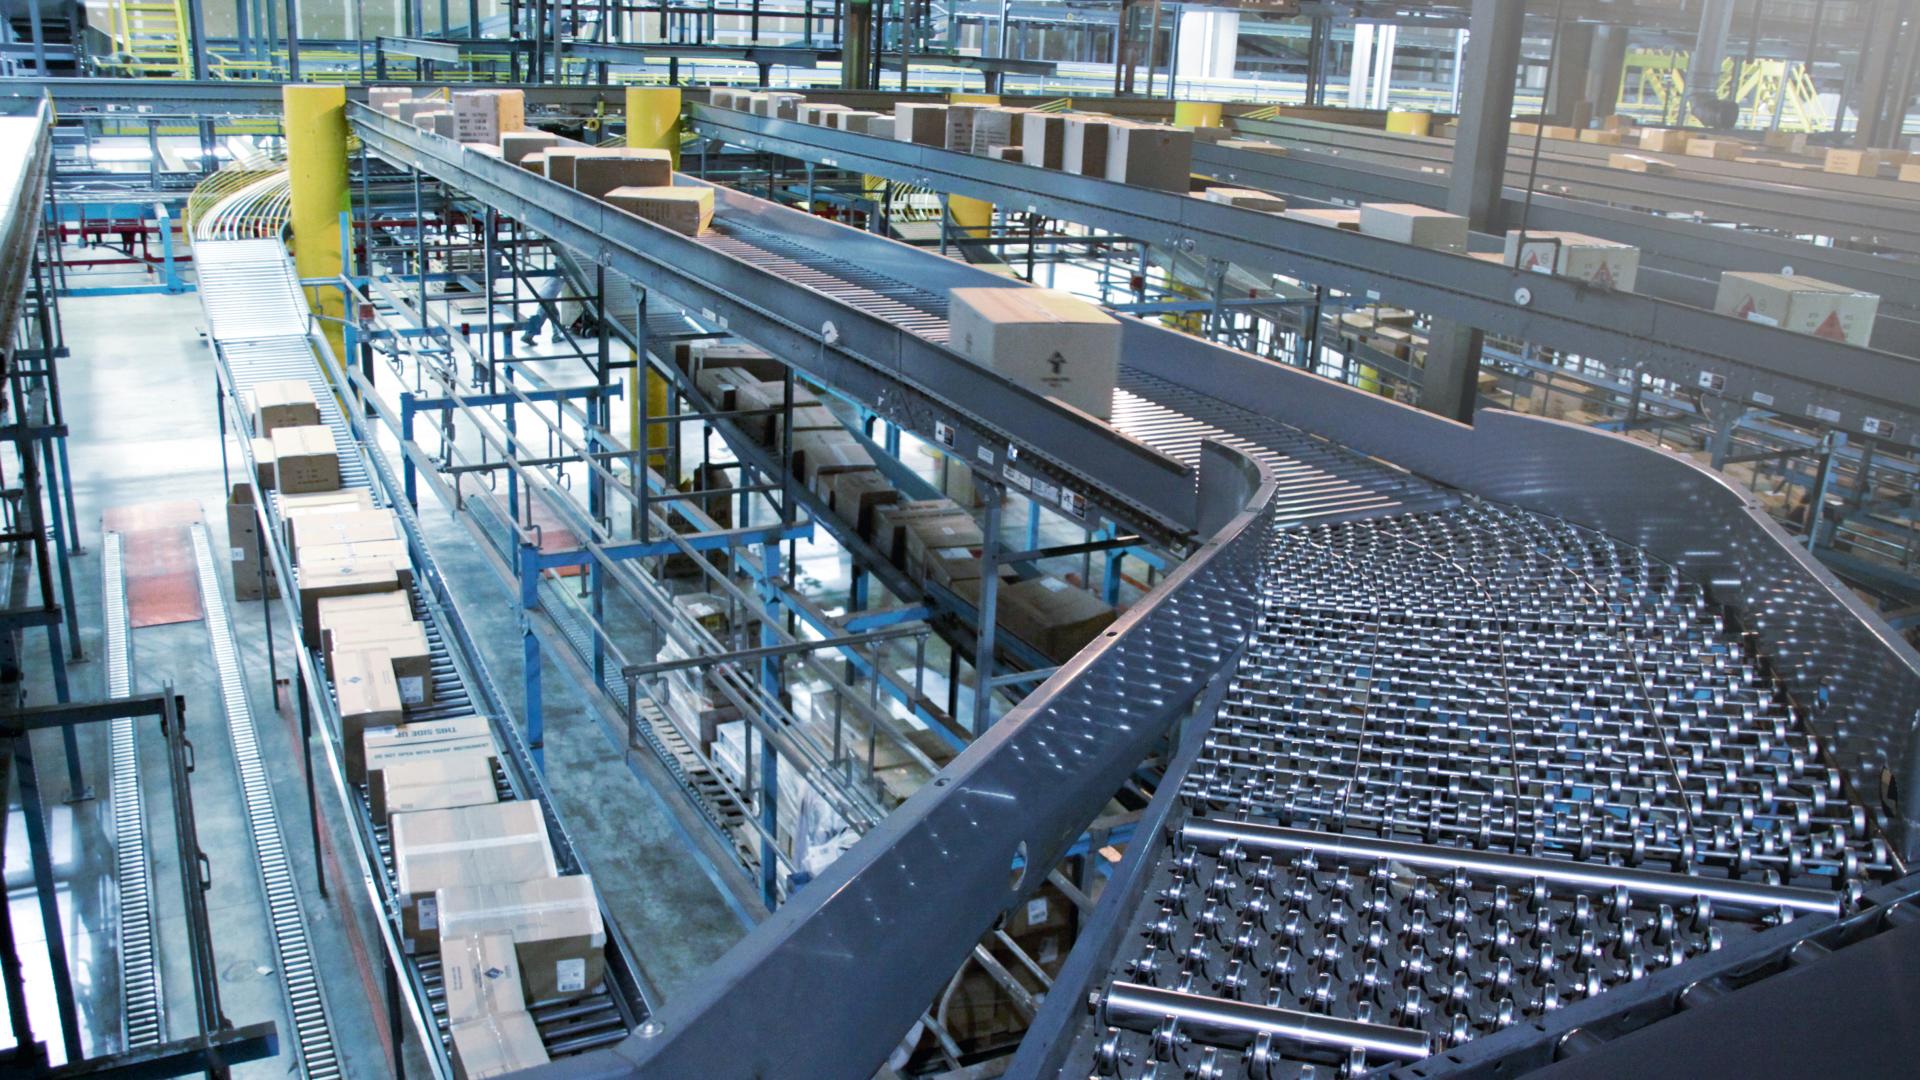 viastore conveyor and sortation systems at Boscovs, retail